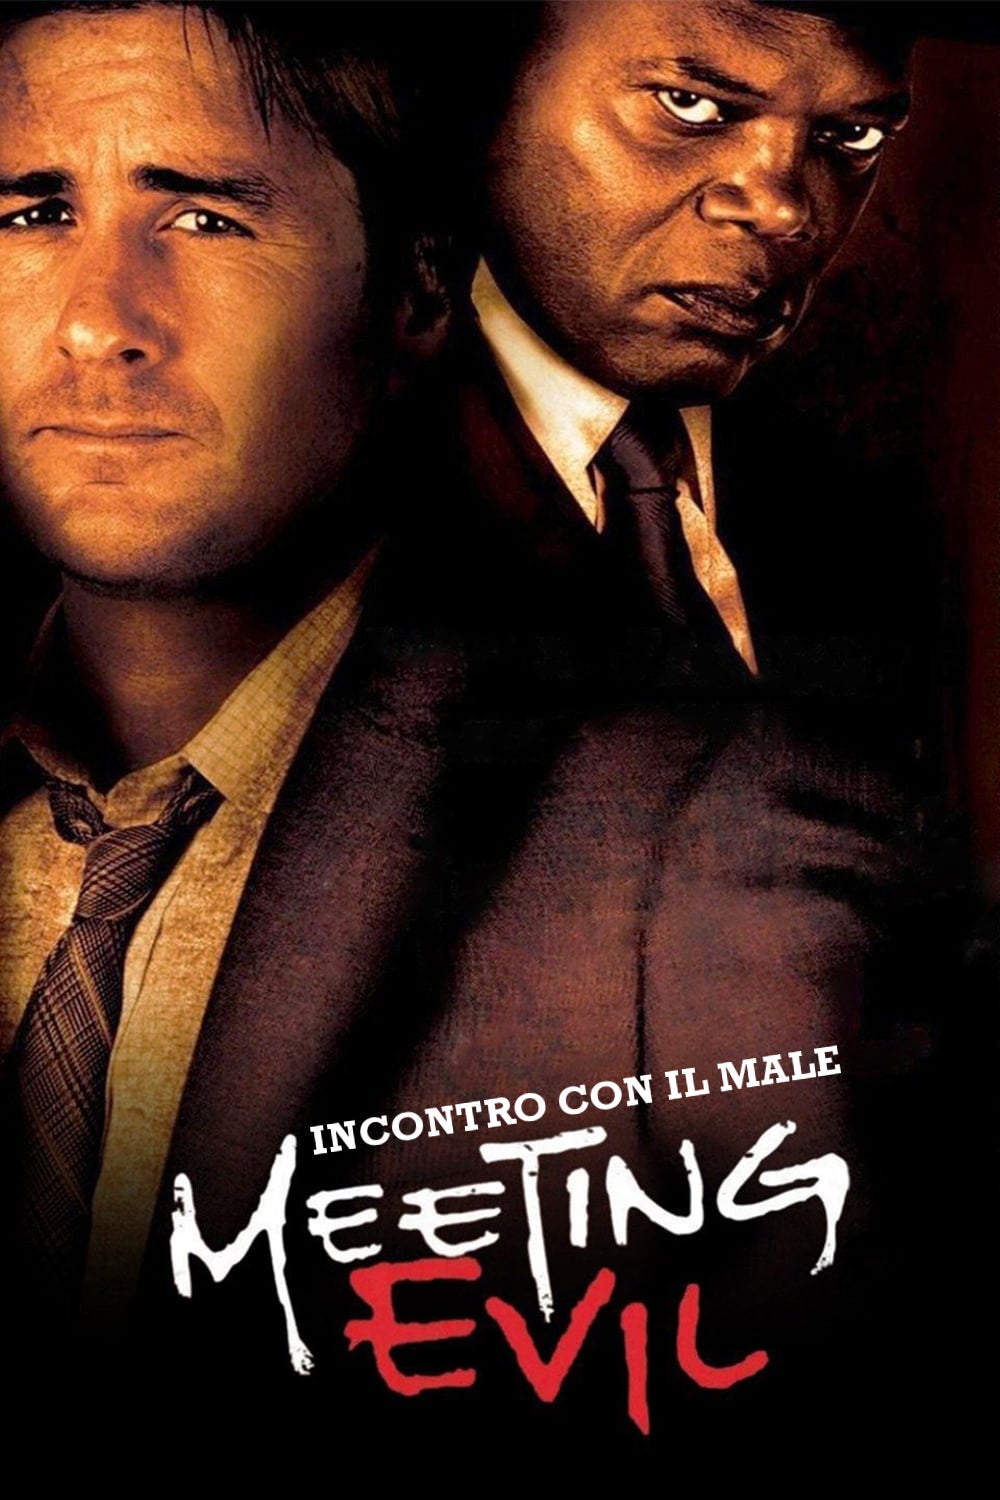 Meeting Evil [HD] (2012)